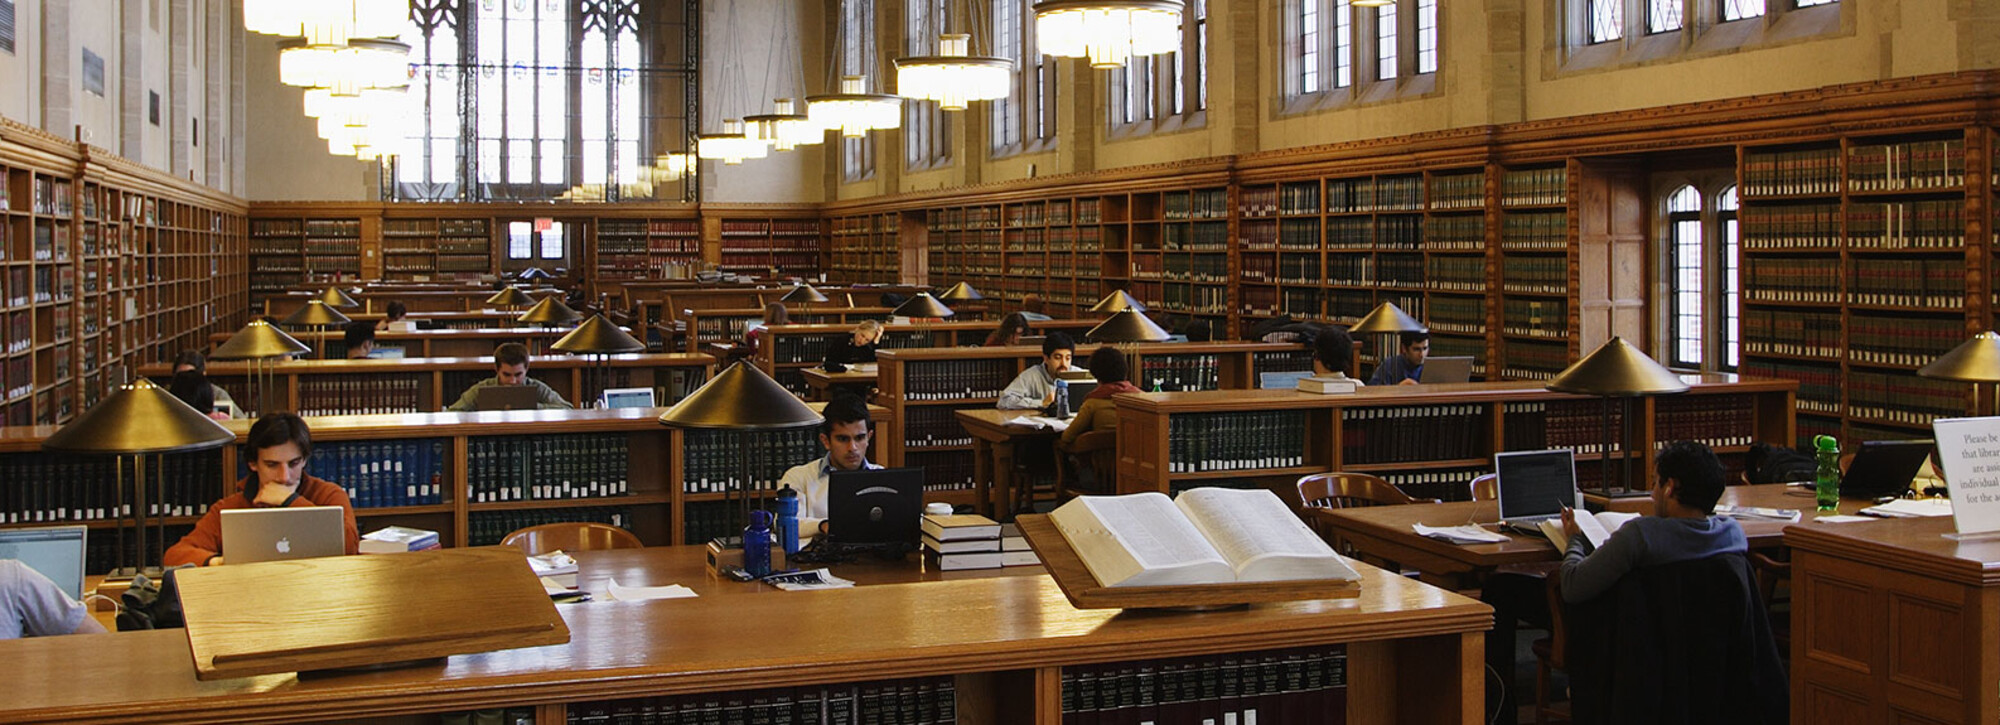 law-school-library-05-lisak.jpg